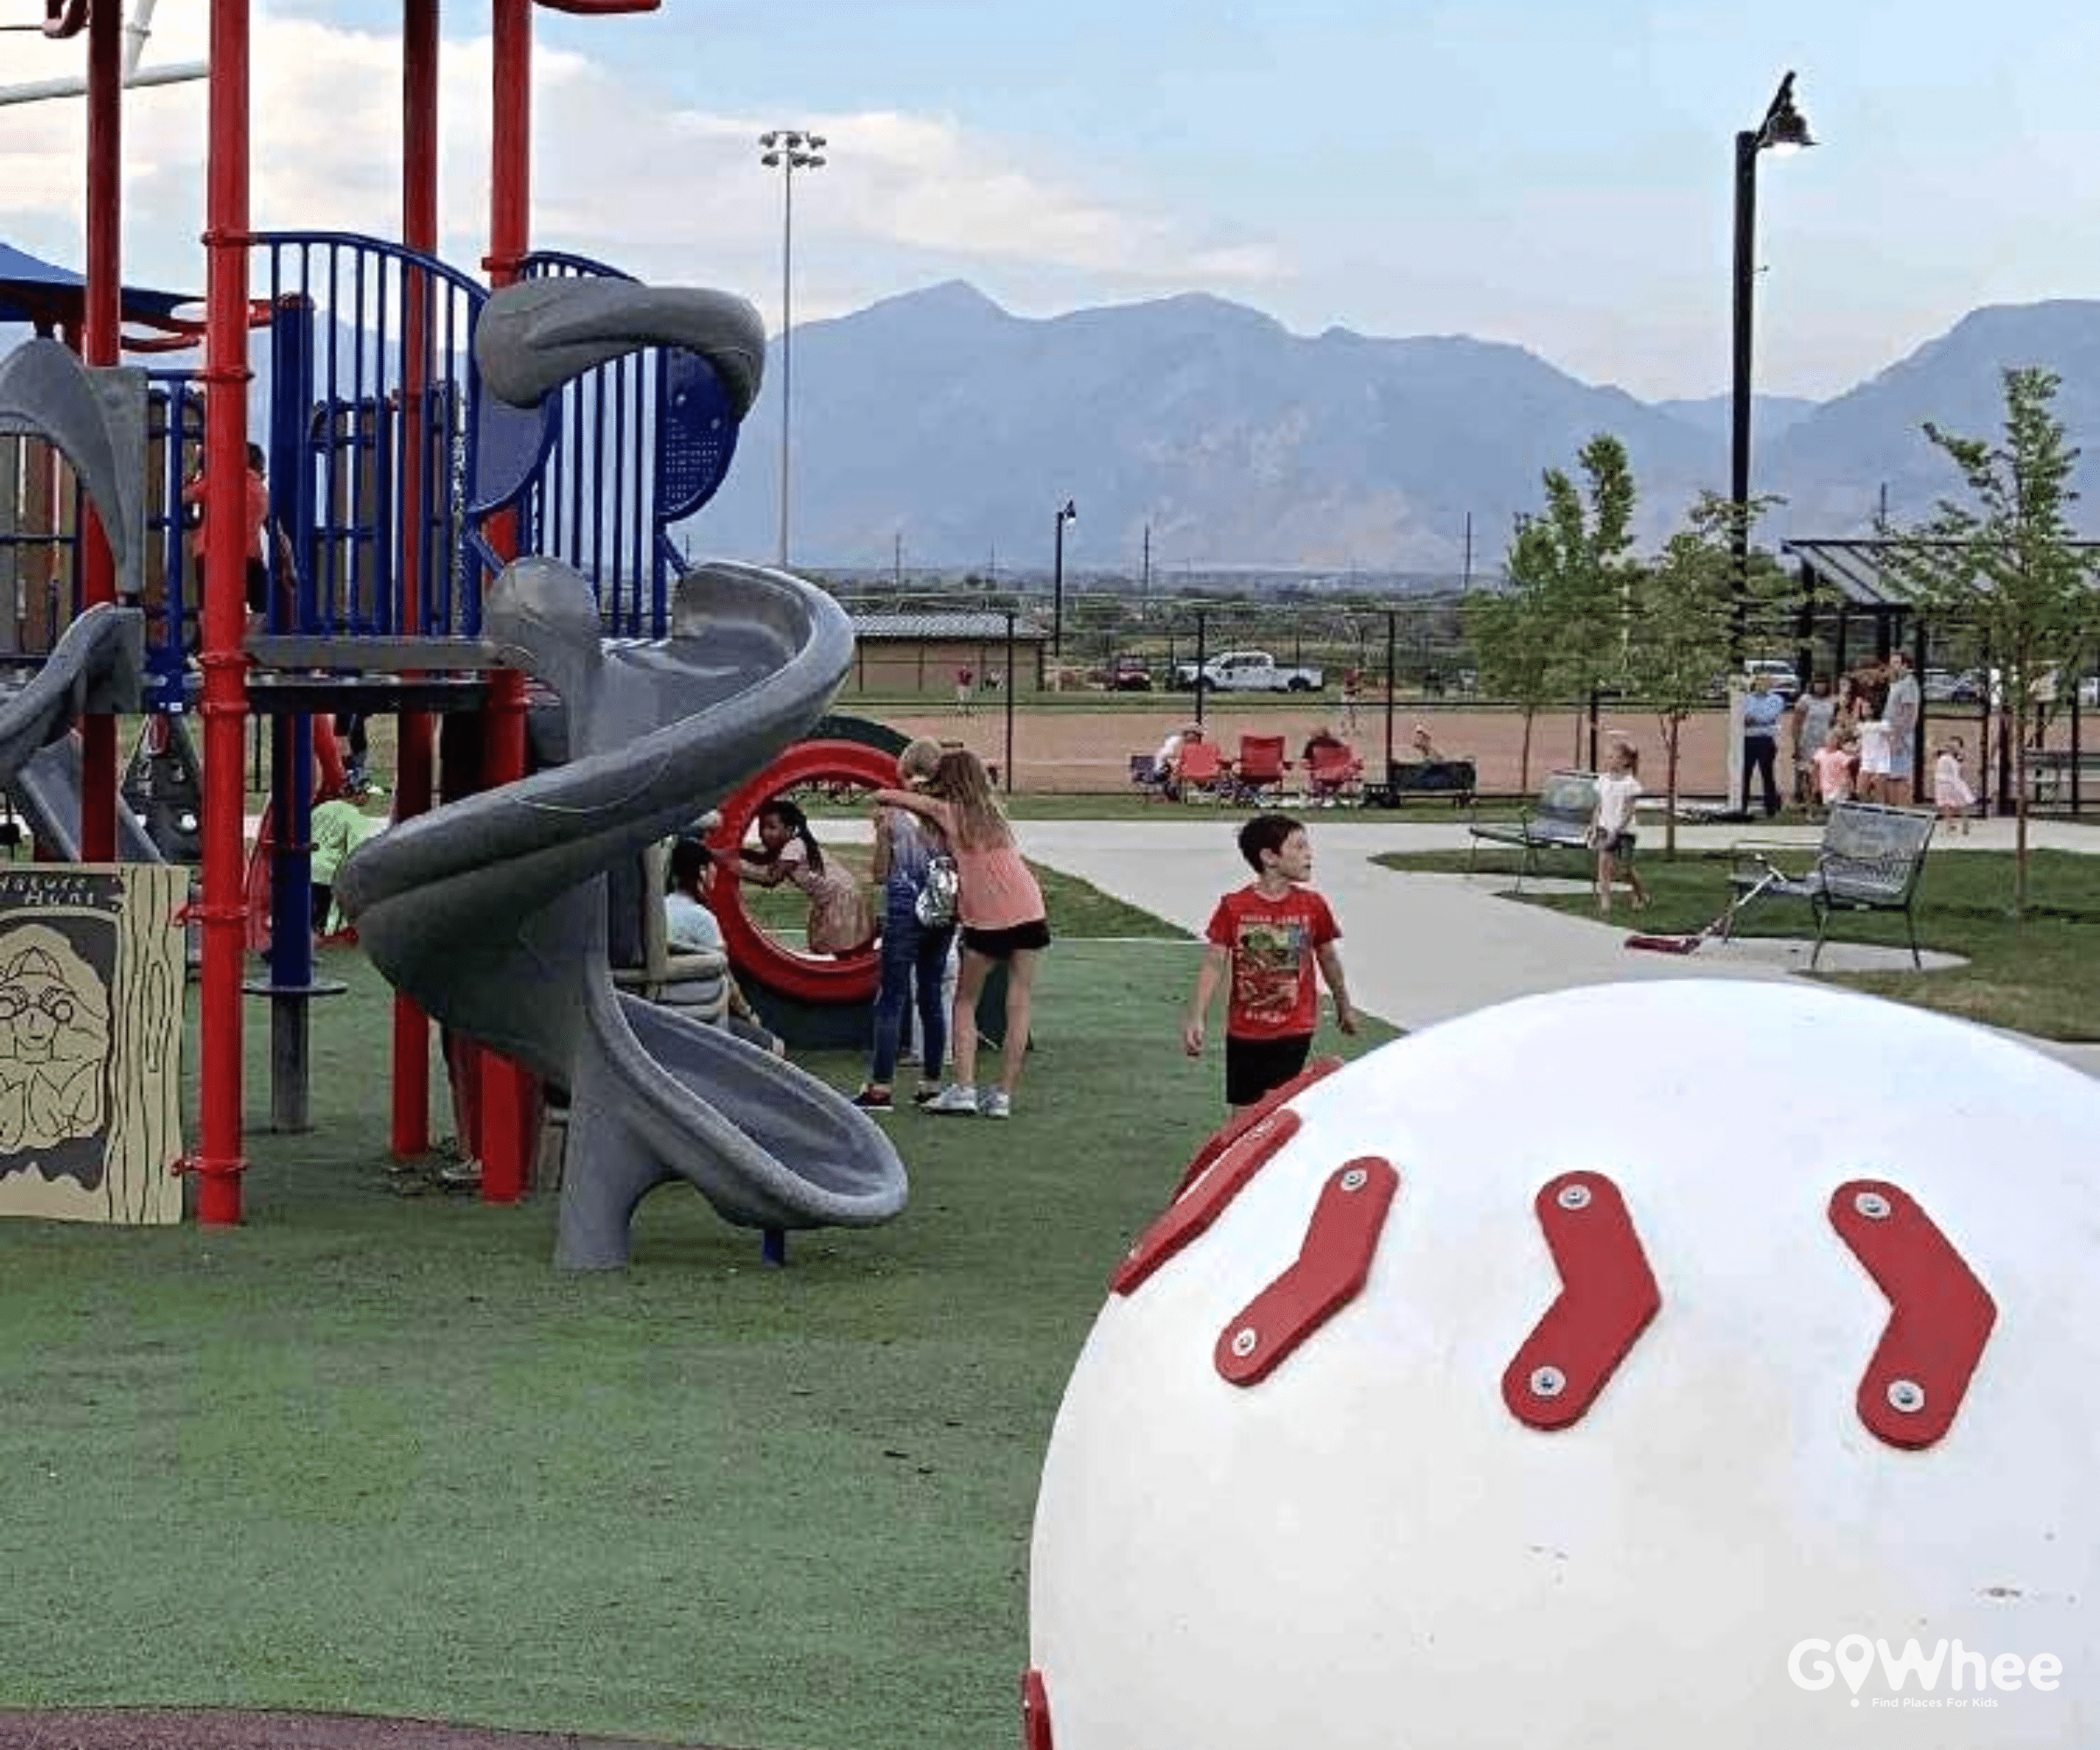 Little boy enjoying a baseball themed playground in Utah